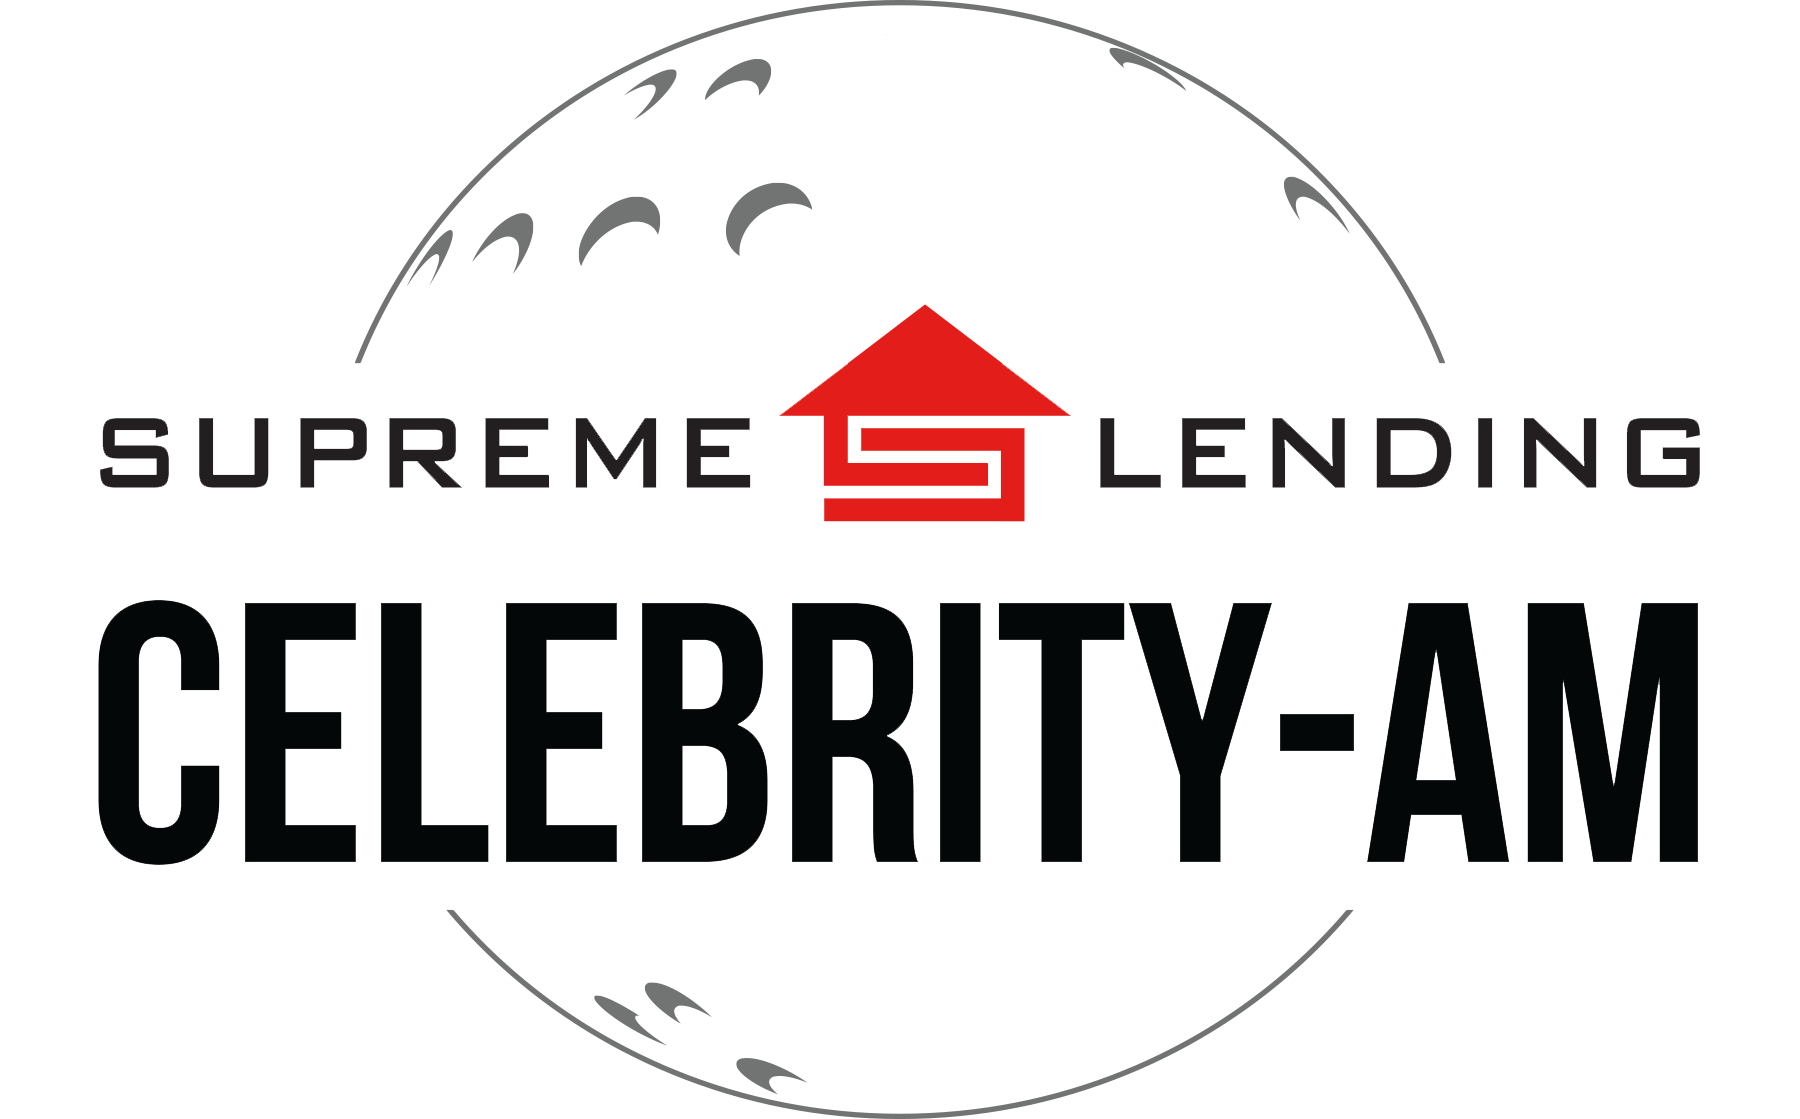 Supreme Lending Logo - Supreme Lending Celebrity Am. Benefiting the Momentous Institute